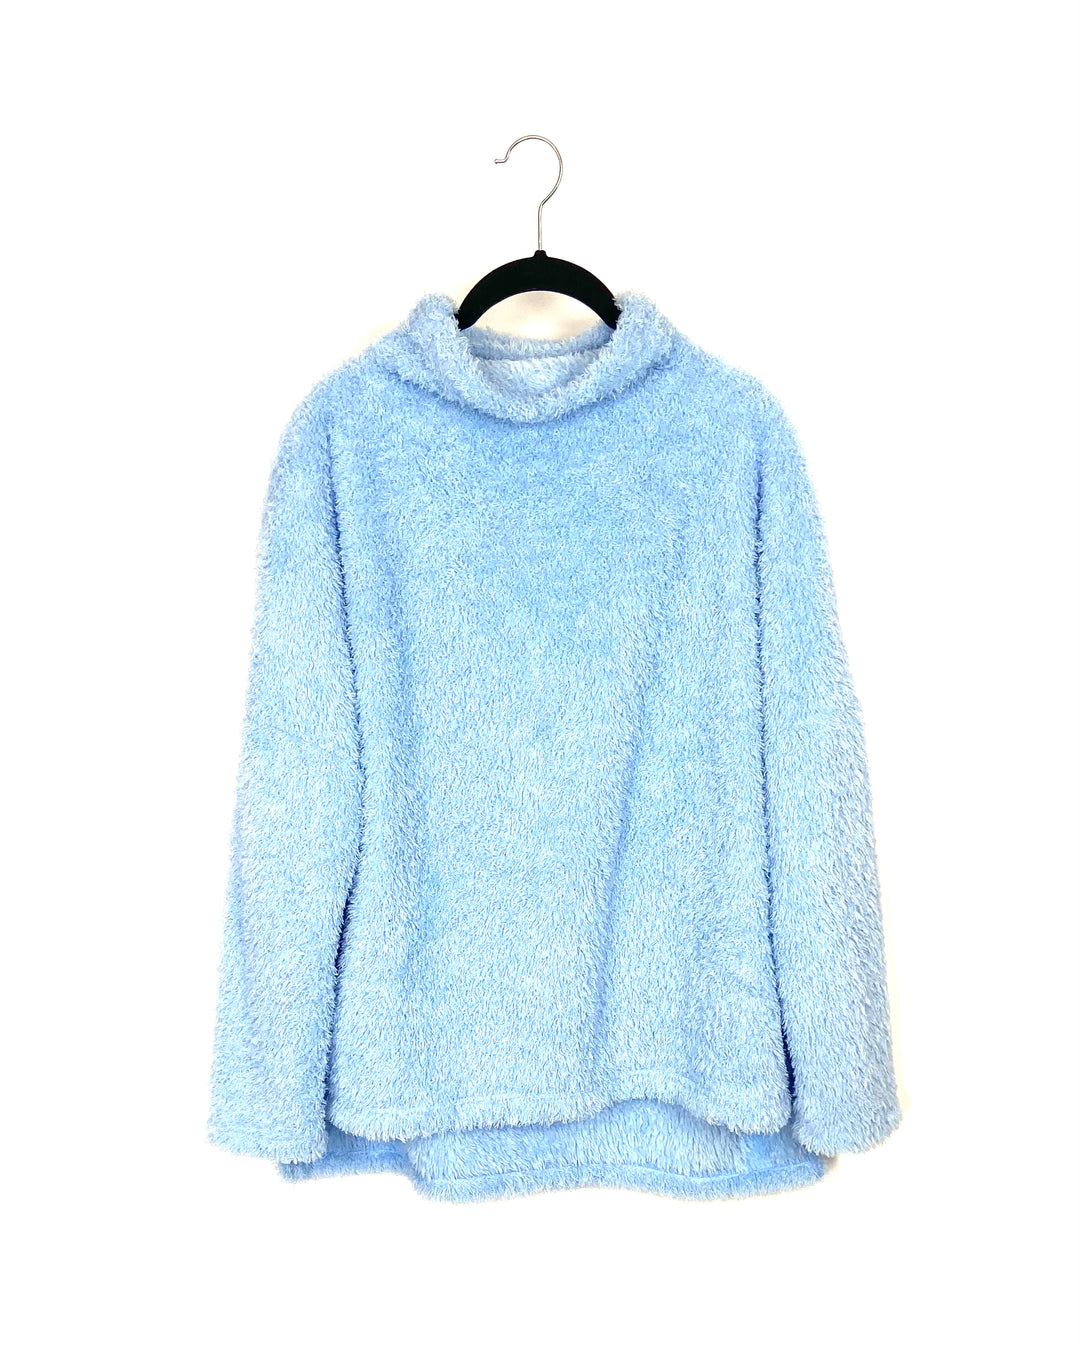 Blue Fuzzy Turtleneck Sweater - Small